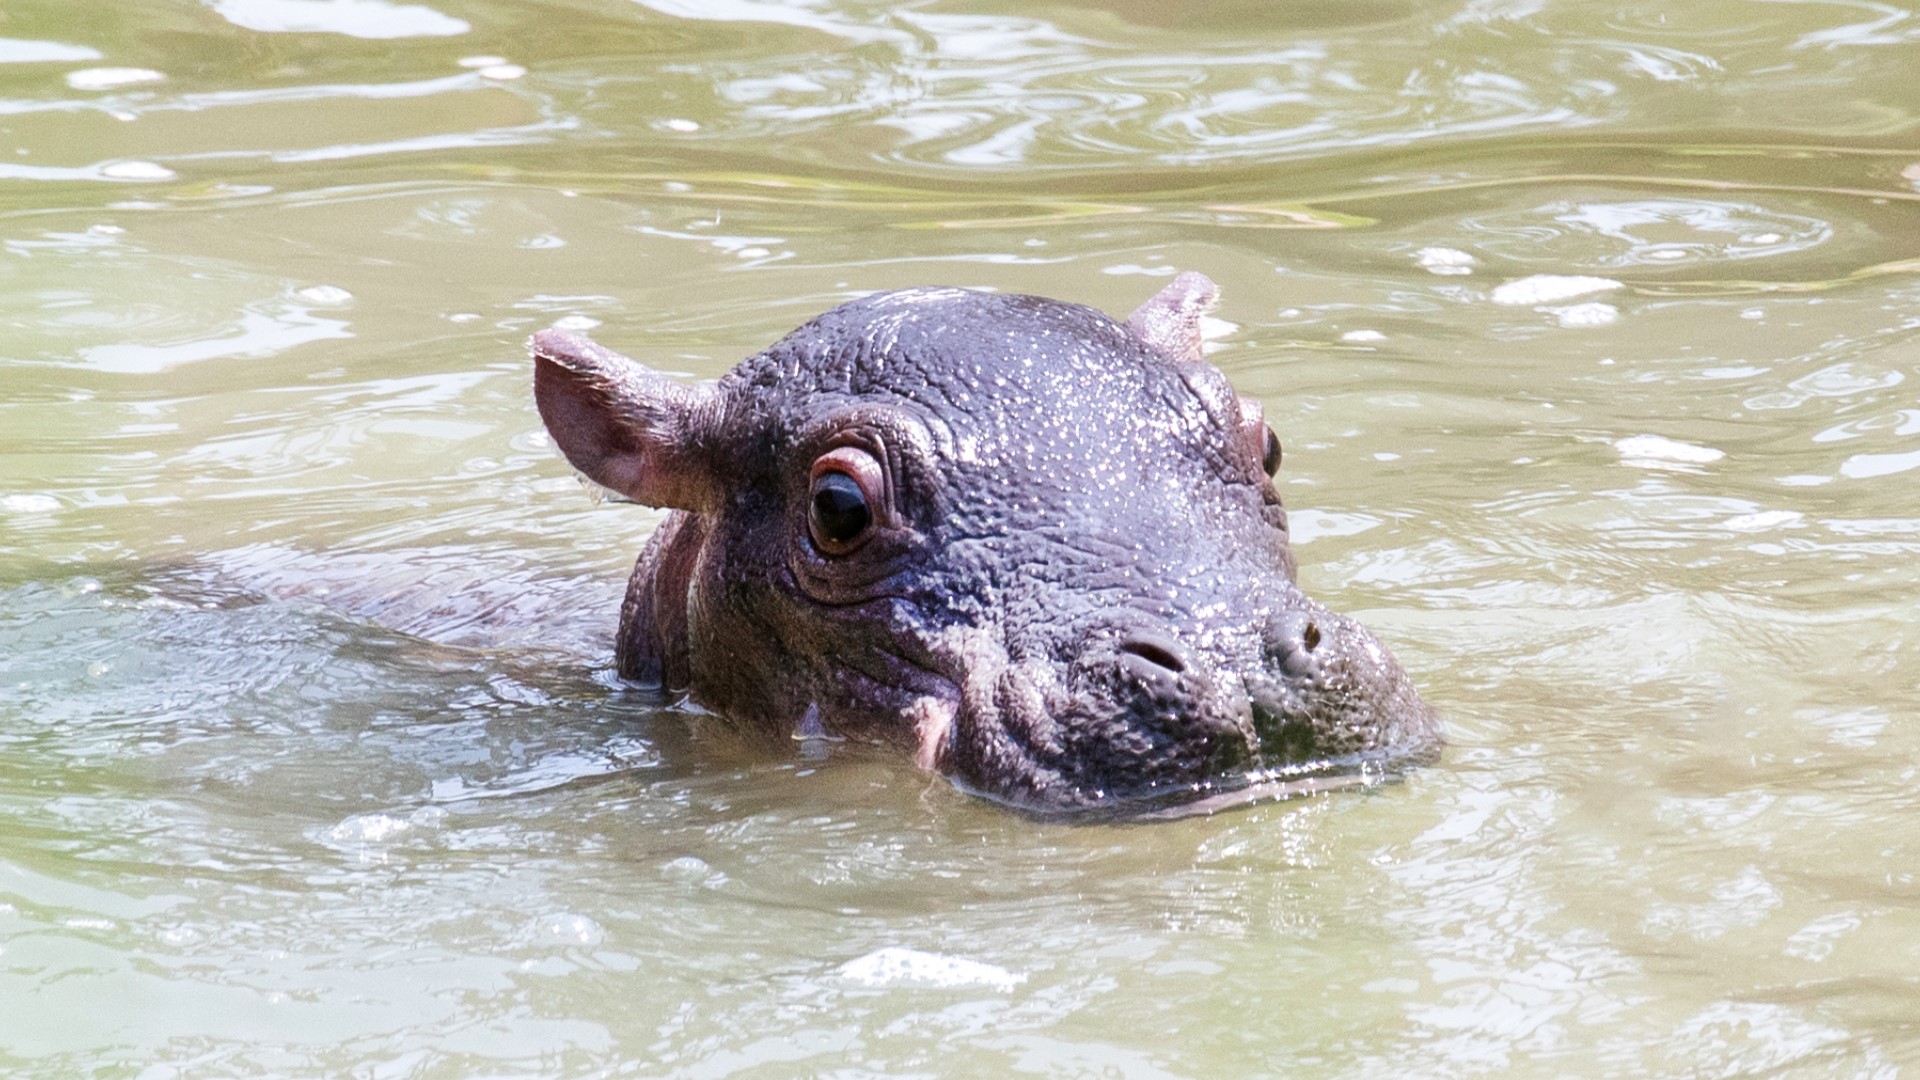 Cheyenne Mountain Zoo Nile hippopotamus Zambezi welcomed her first calf on Tuesday, July 20, 2021.